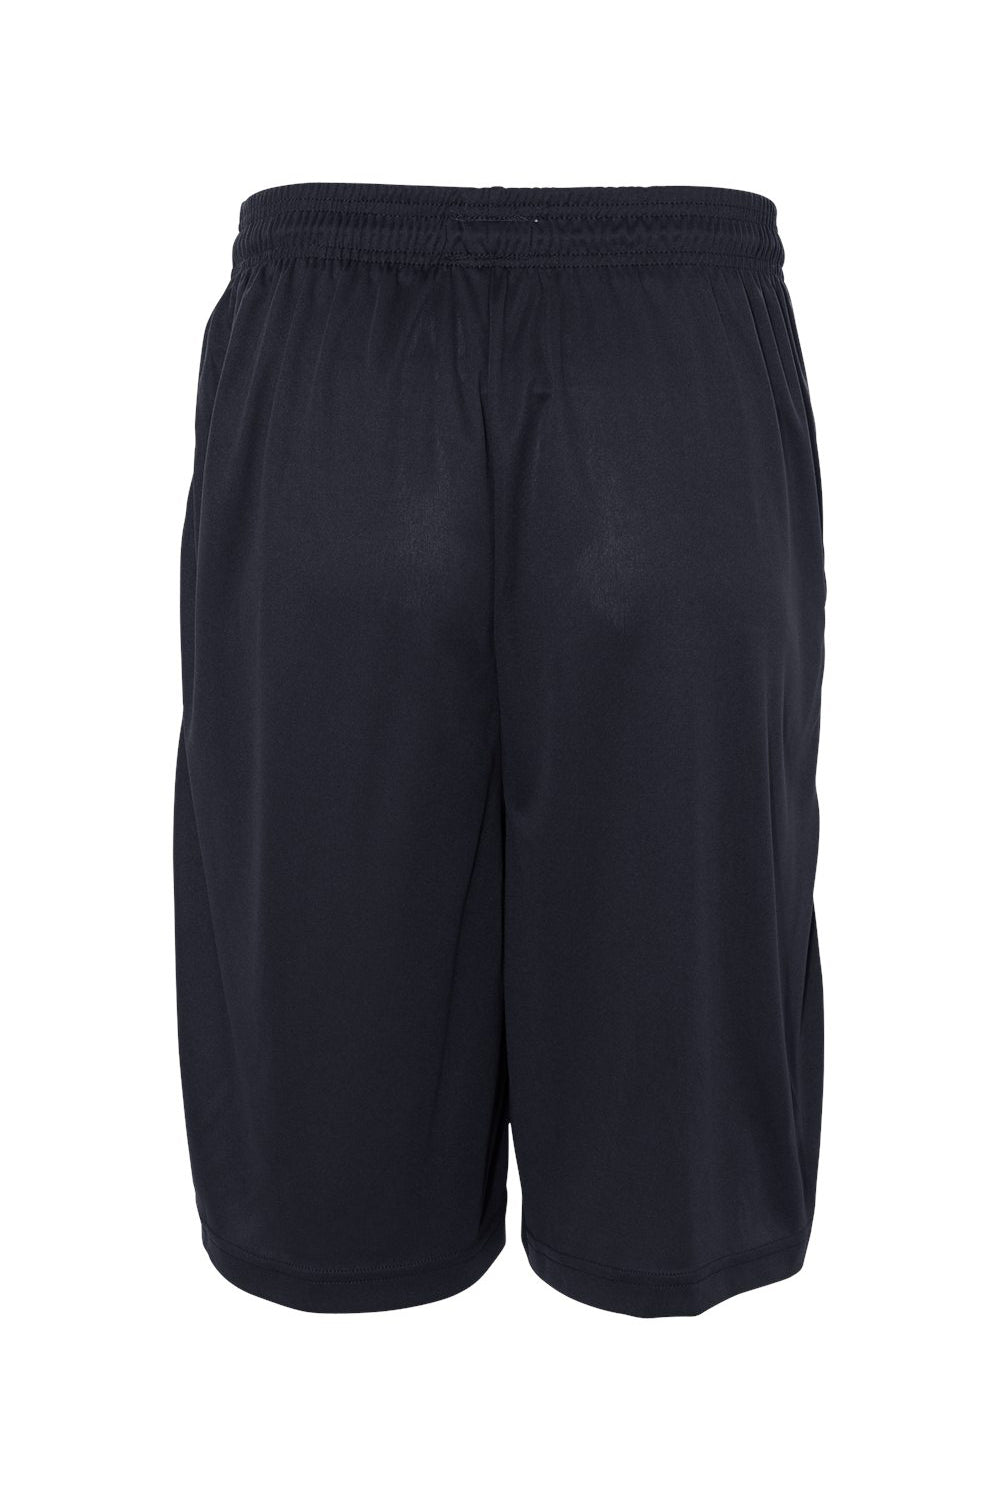 Badger 4119 Mens B-Core Moisture Wicking Shorts w/ Pockets Navy Blue Flat Back